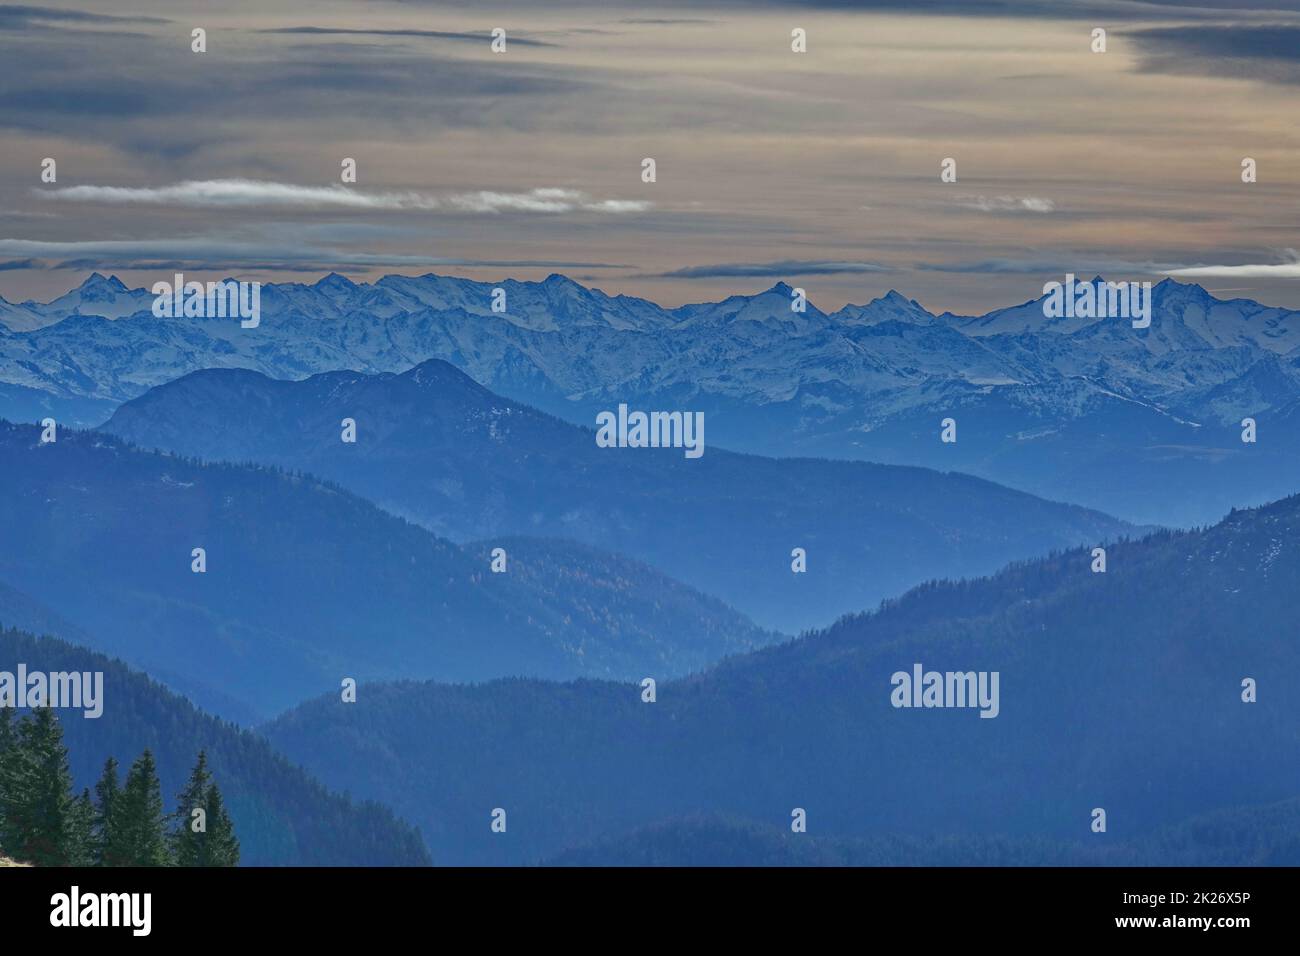 Austria, Tyrol, Karwendel mountains, Bavaria, view from the Bodenschneid mountain, mangfall mountains Stock Photo